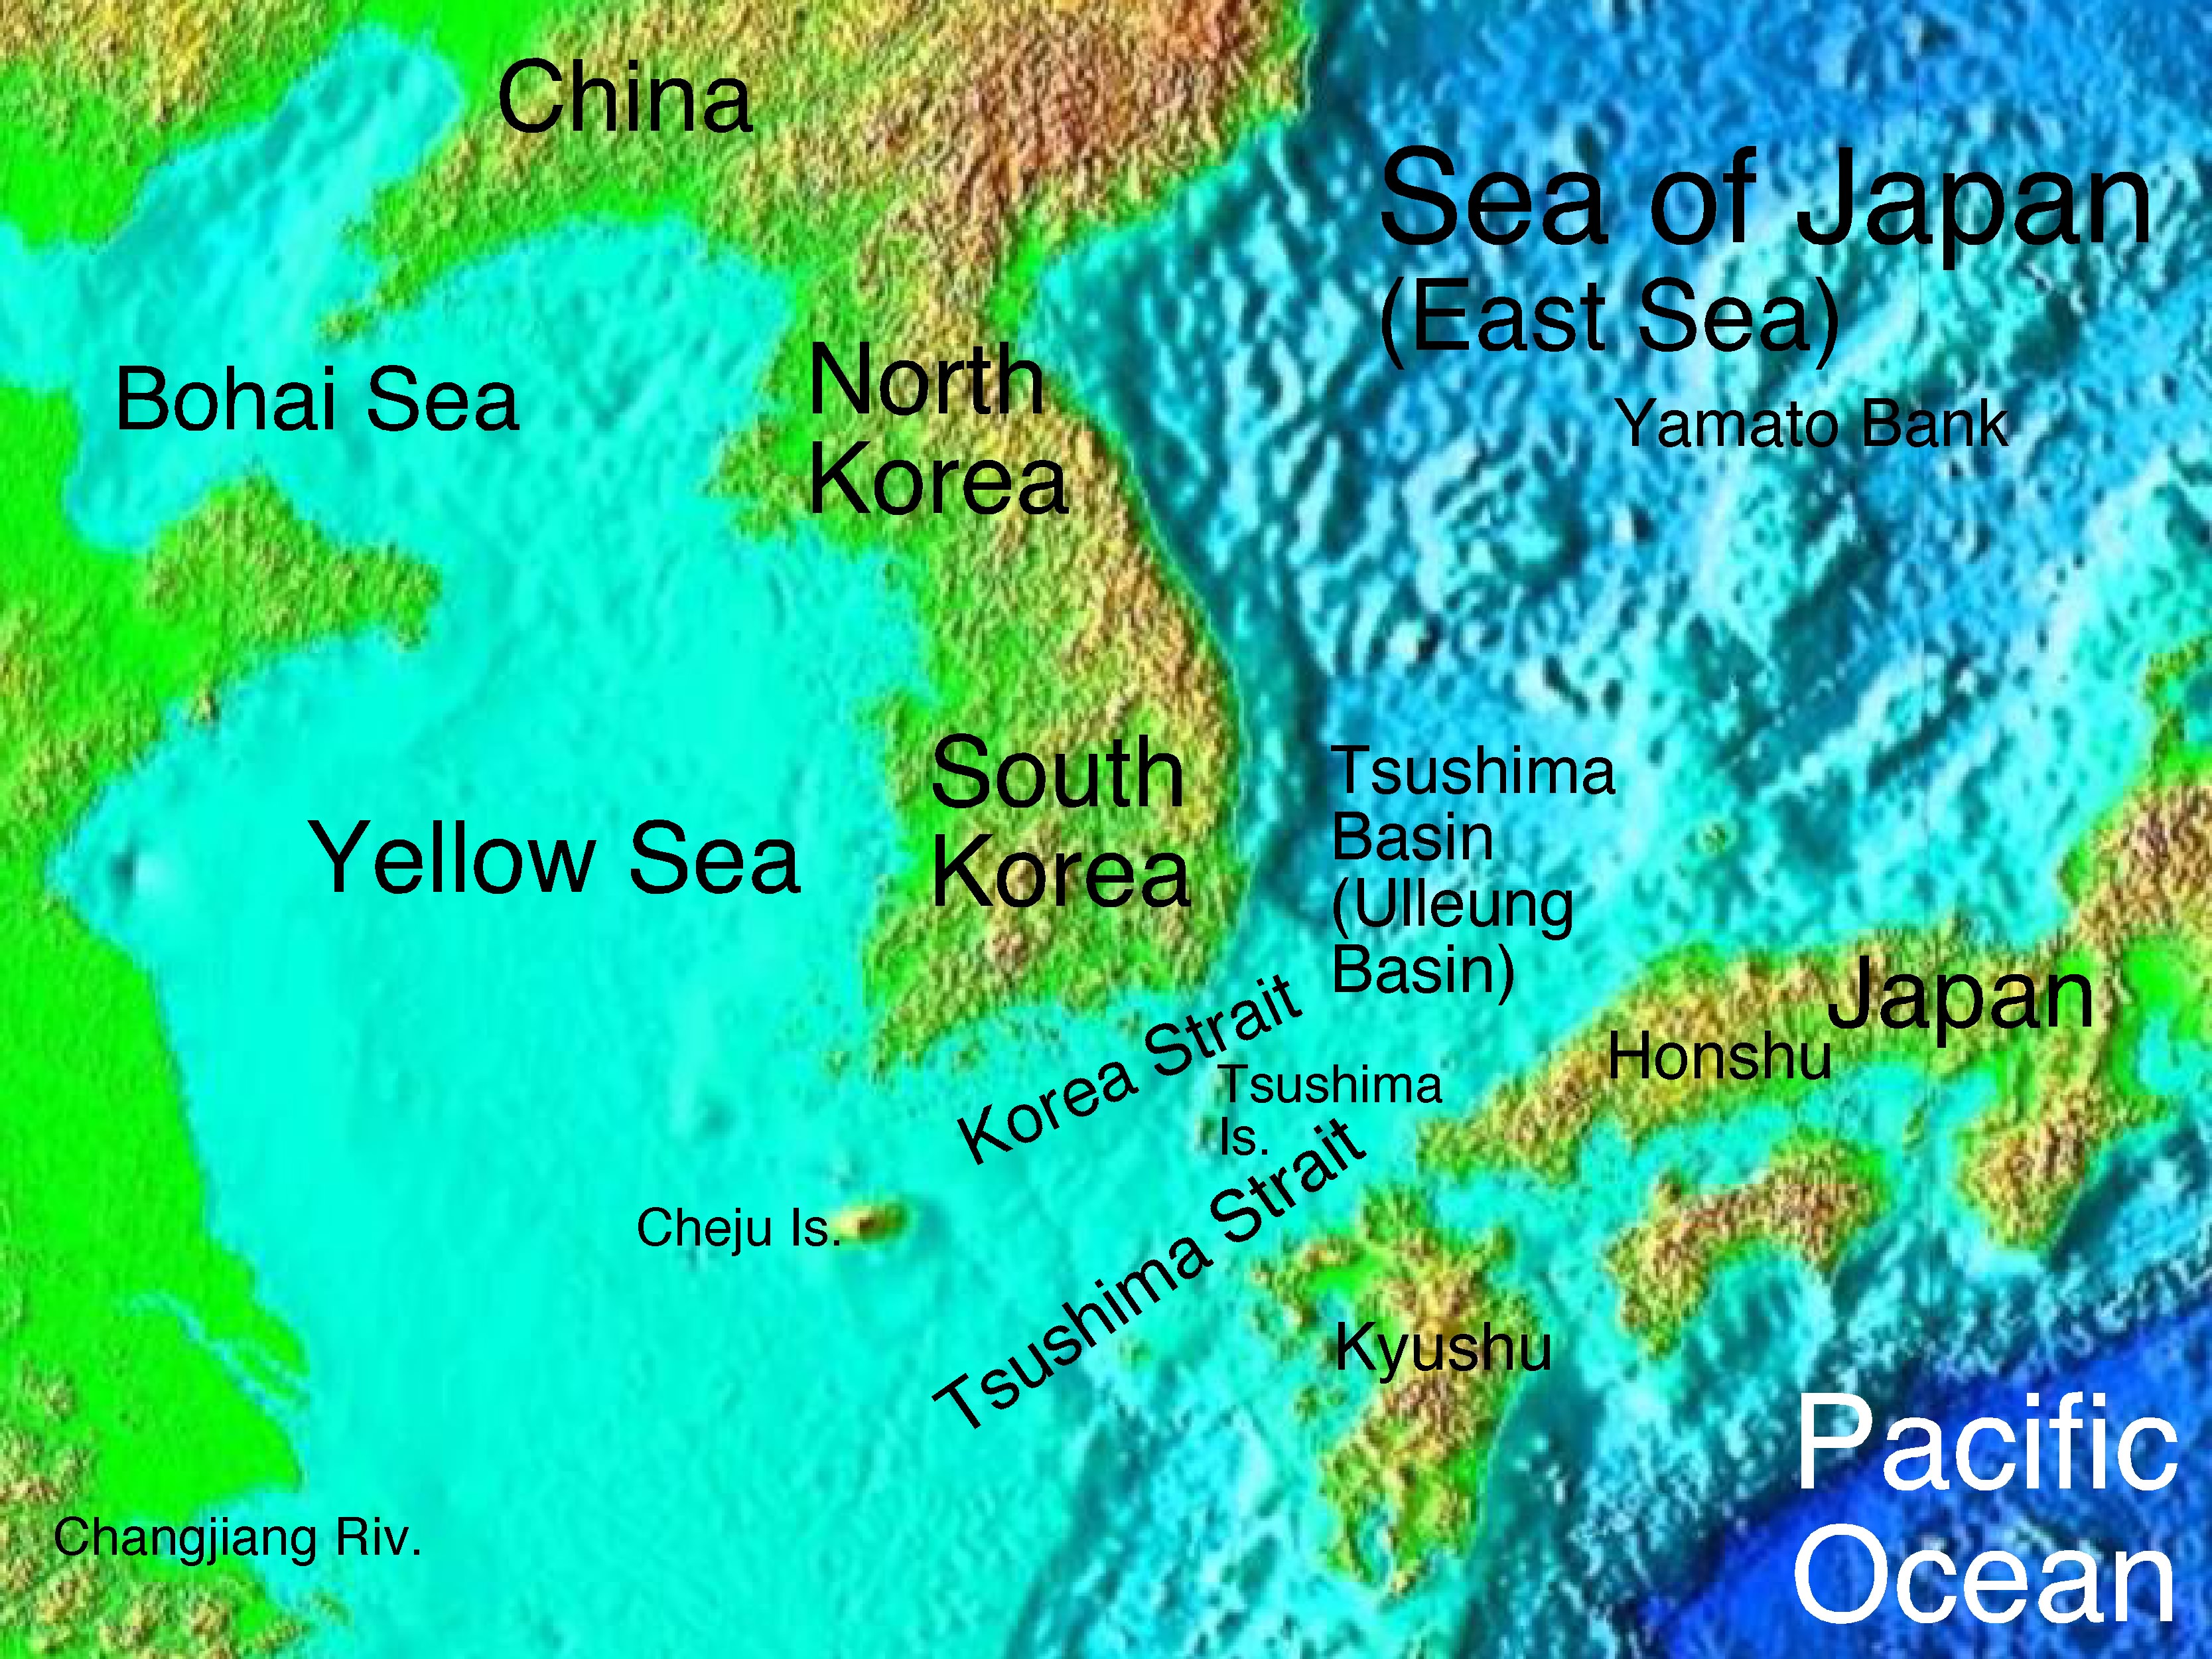 Korea Tsushima Strait descr